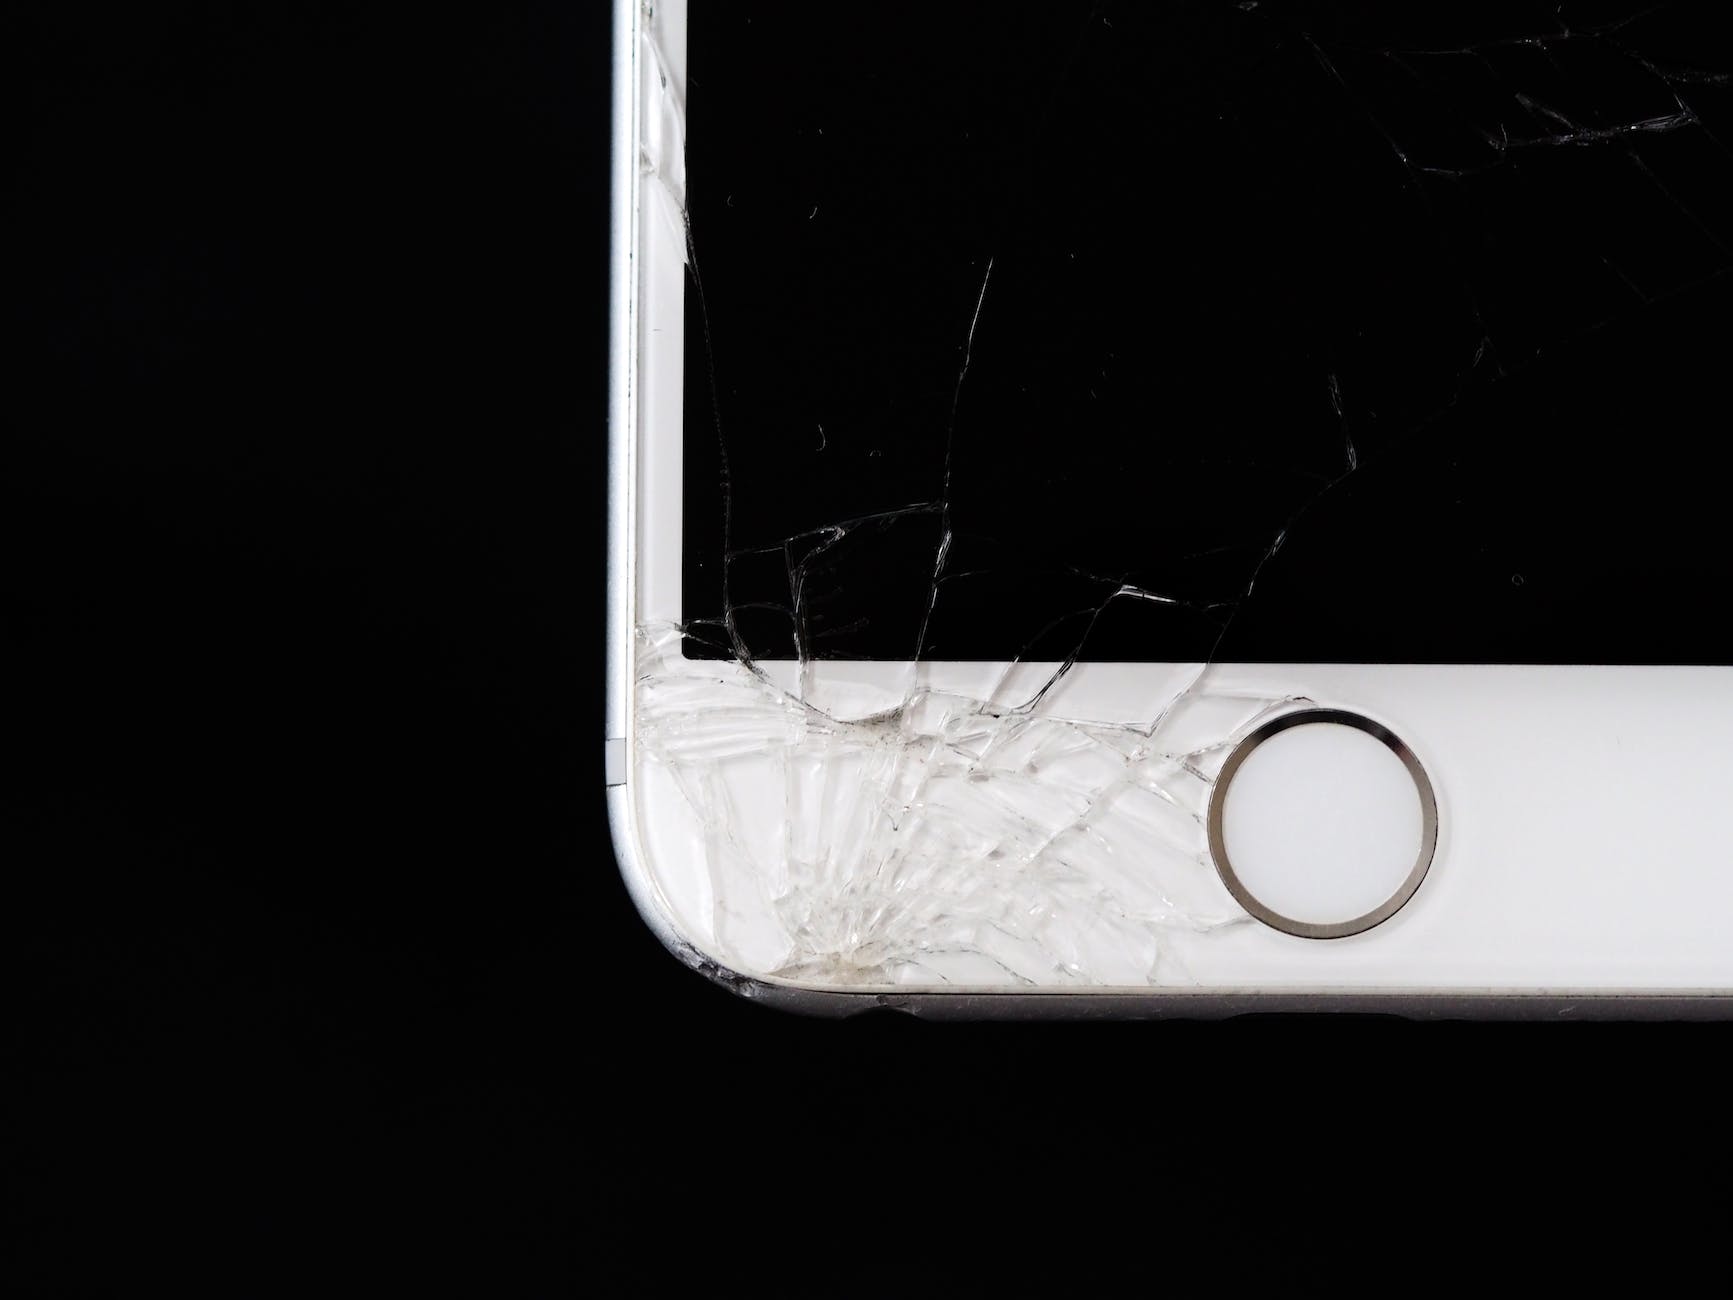 Upgrade vs repair your iPhone?